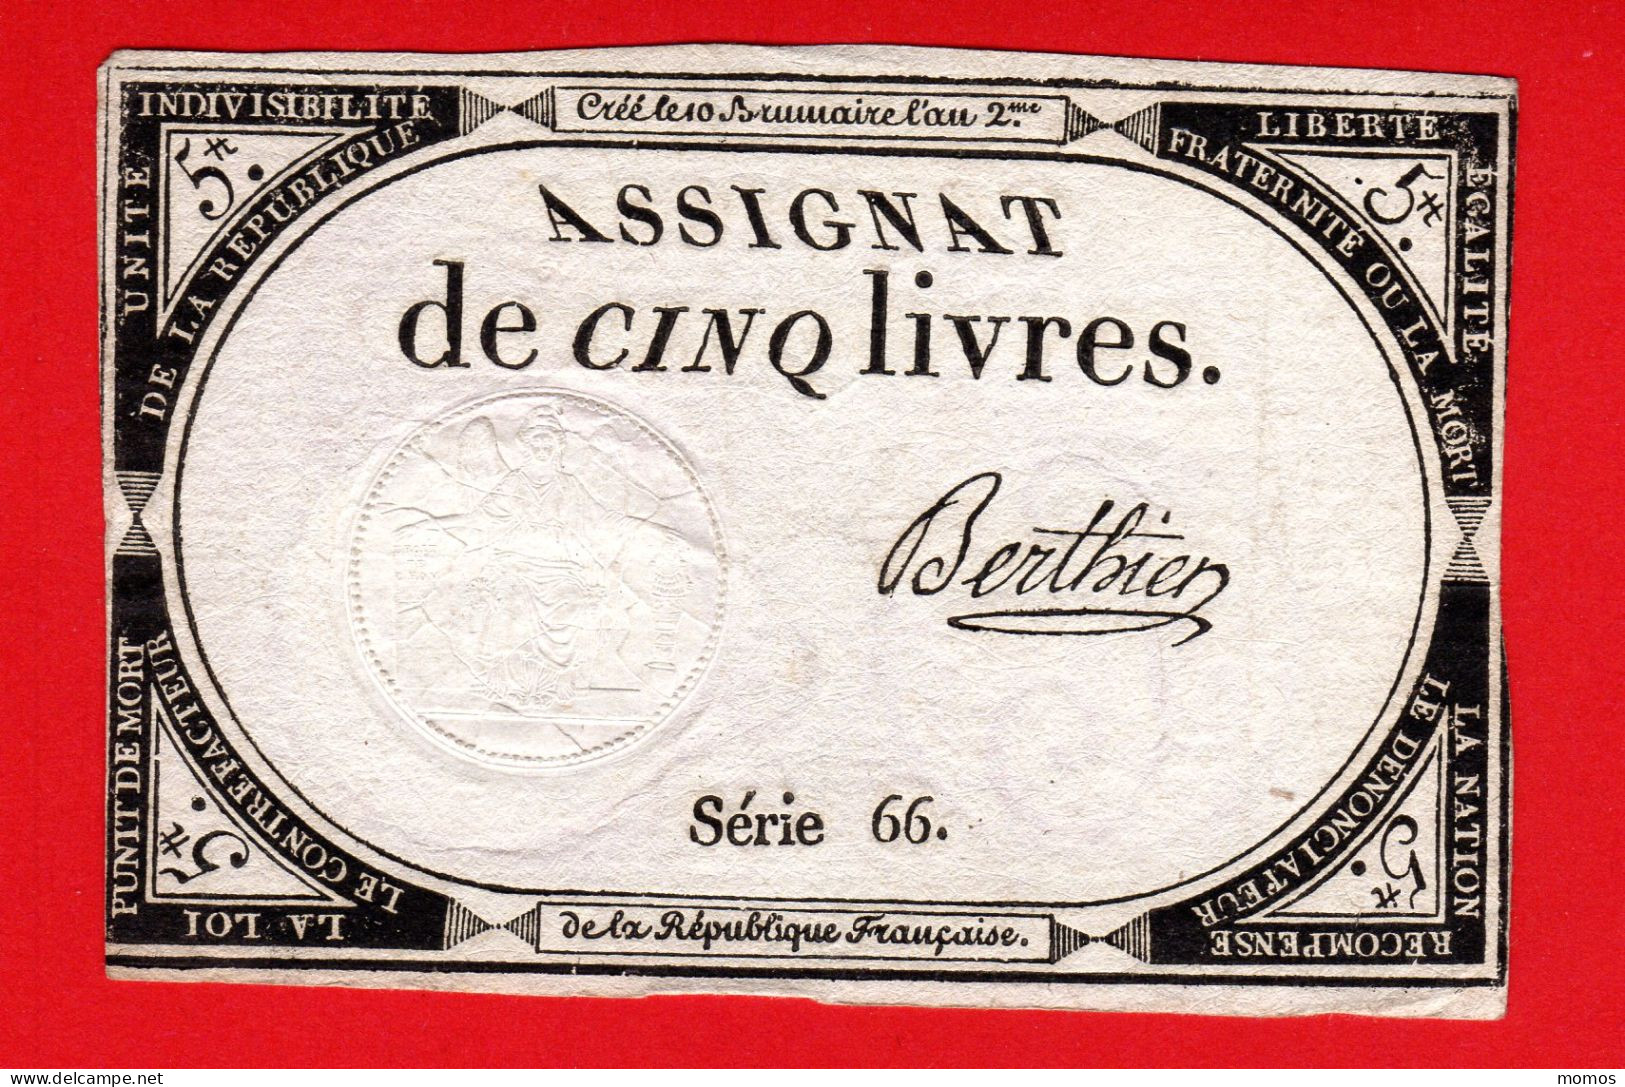 ASSIGNAT DE 5 LIVRES - 10 BRUMAIRE AN 2  (31 OCTOBRE 1793) - BERTHIER - REVOLUTION FRANCAISE  A - Assignate